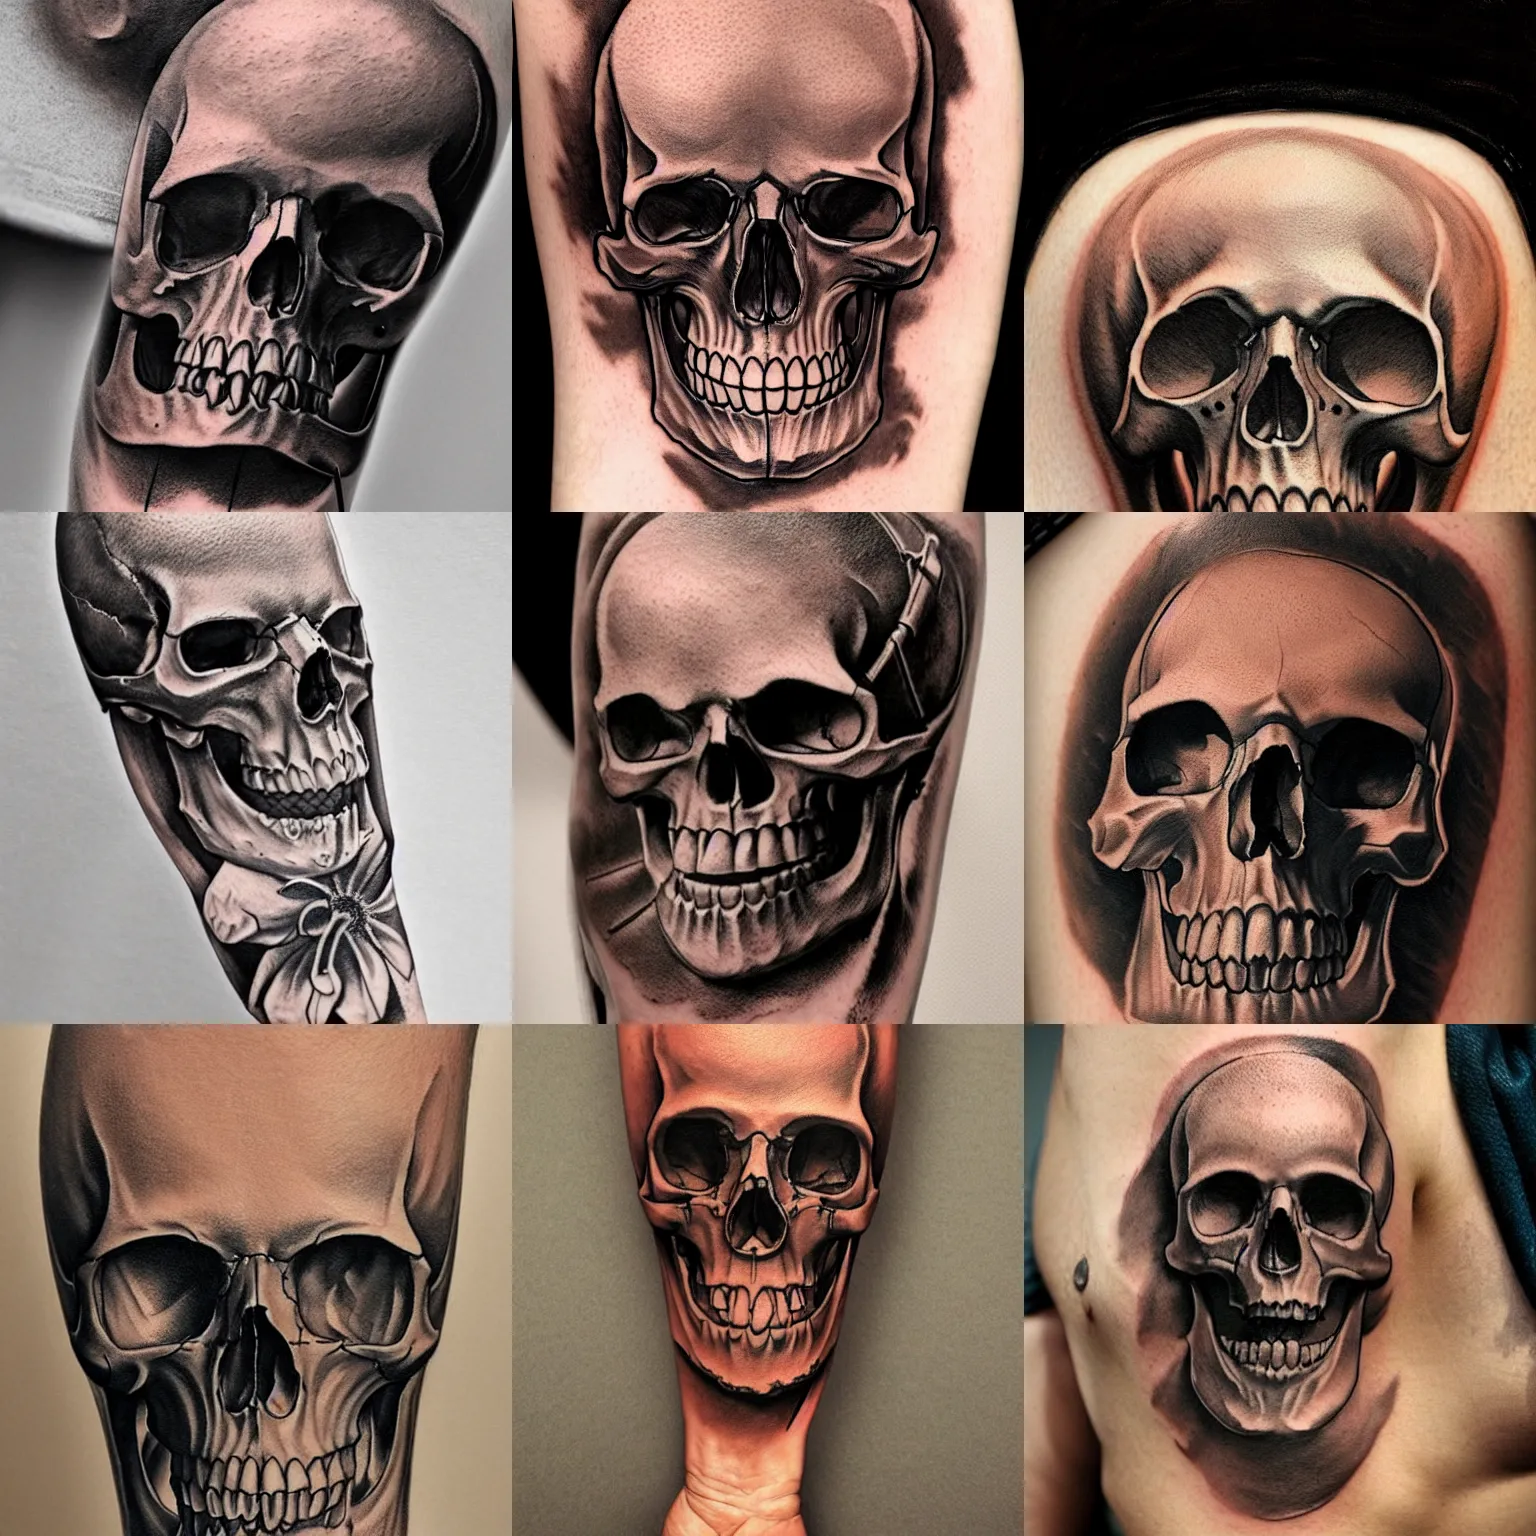 Skulls on Guys Arm